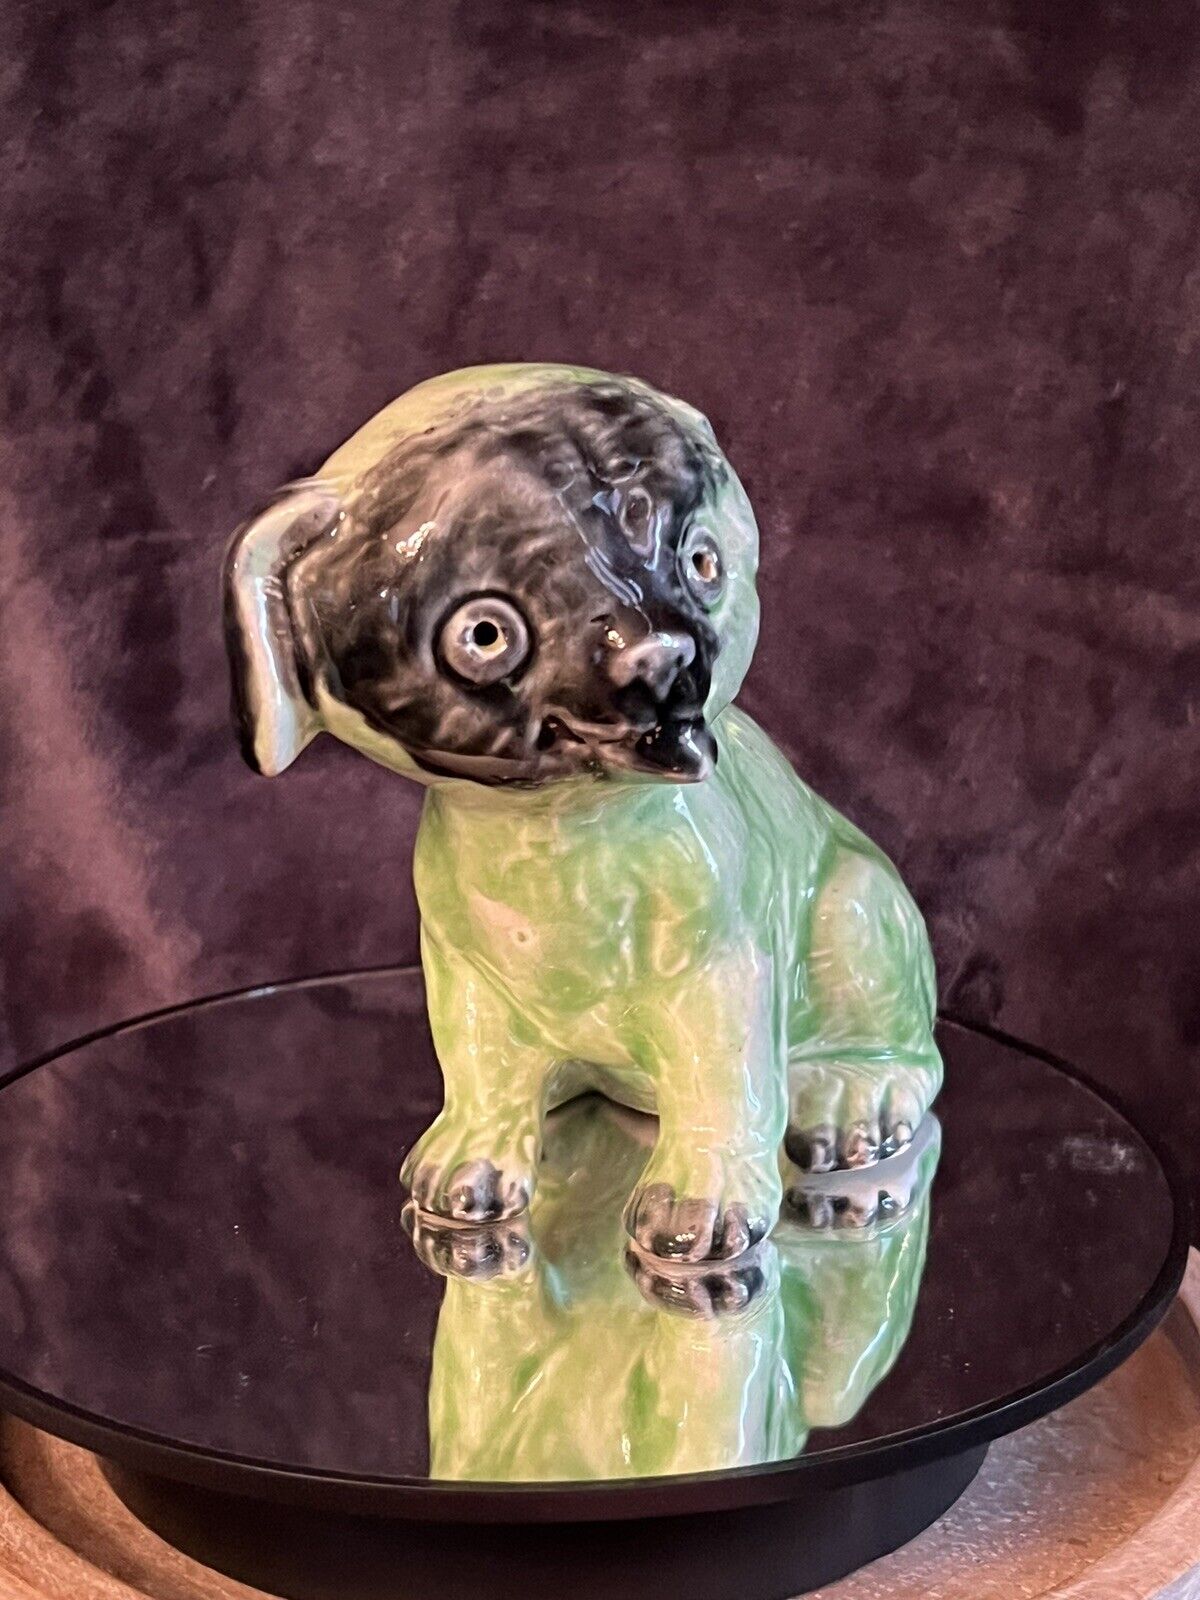 Very unique vintage pug figurine